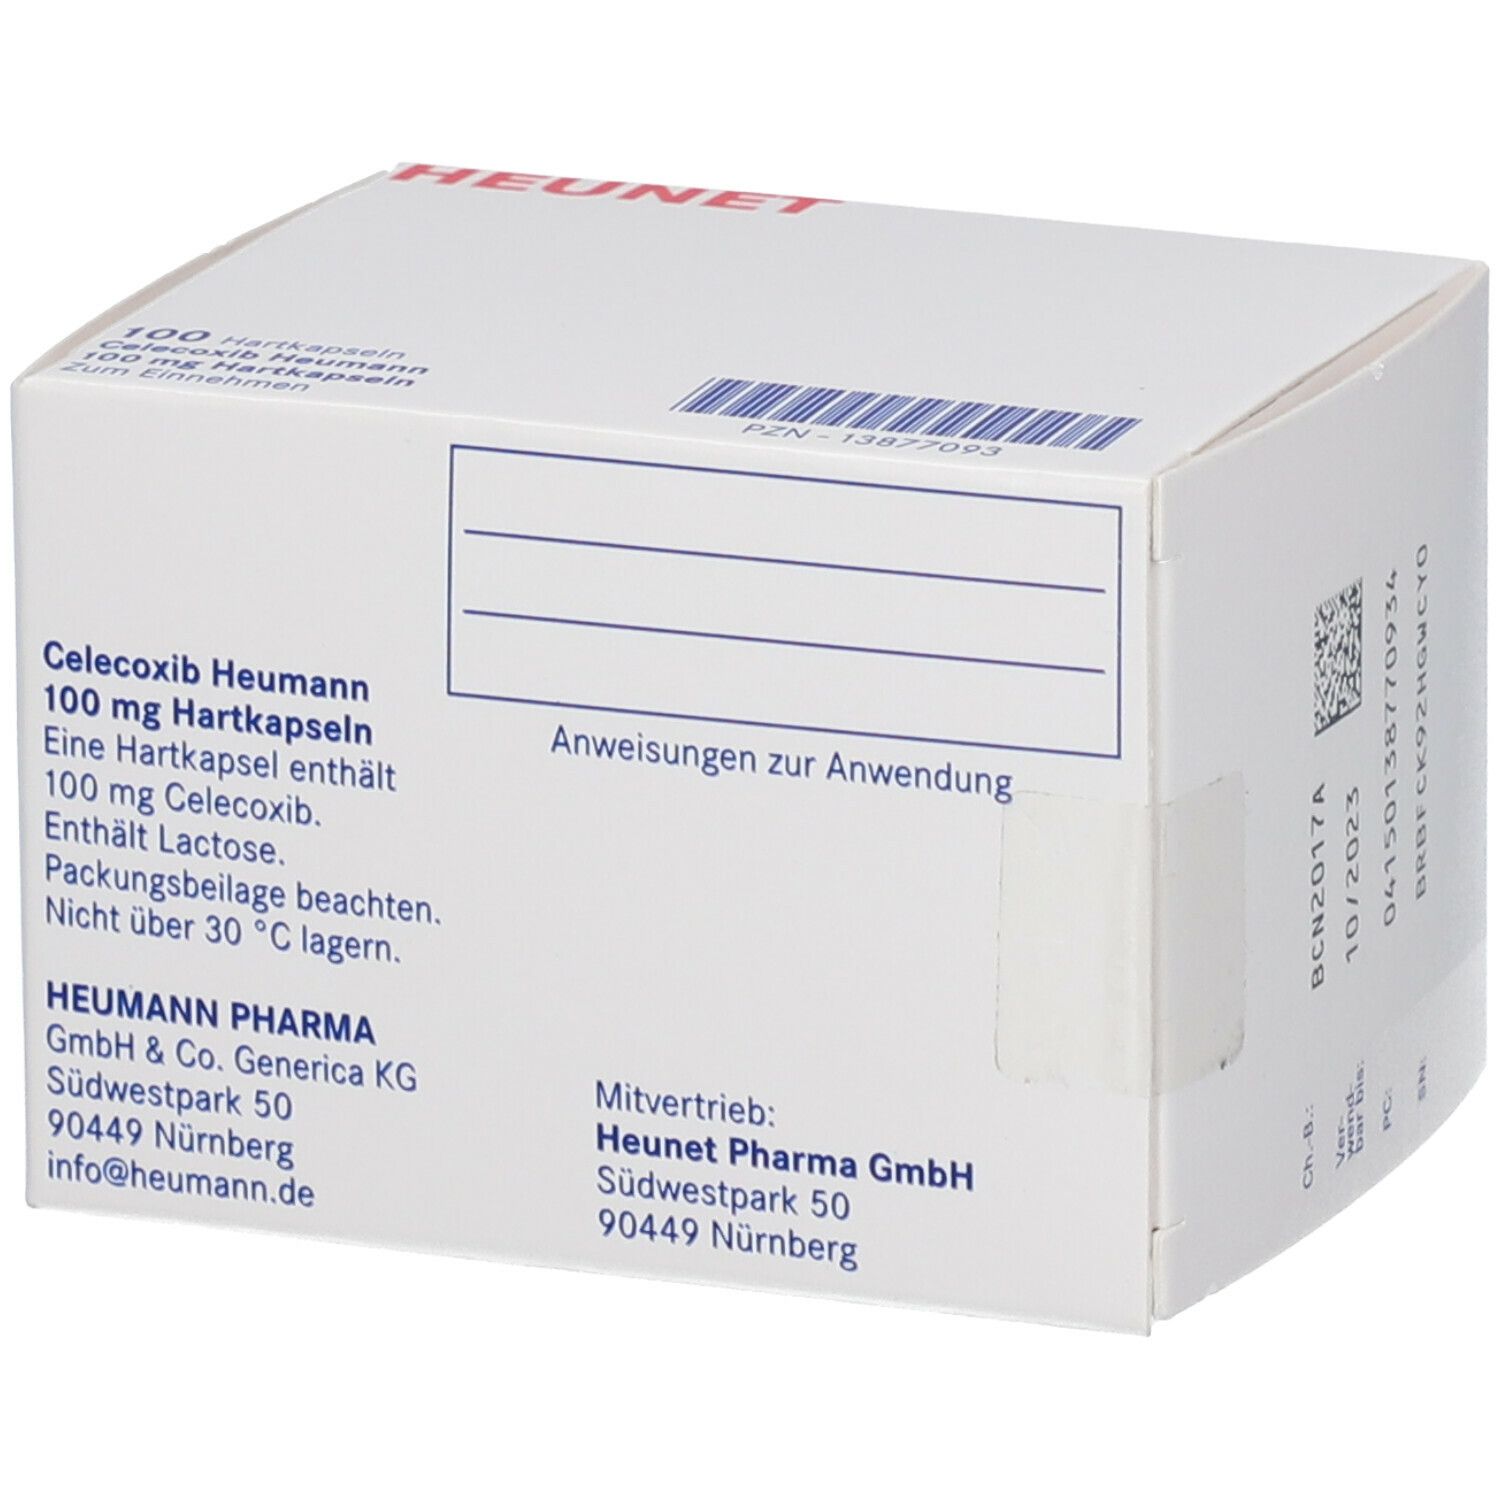 Celecoxib Heumann 100 mg